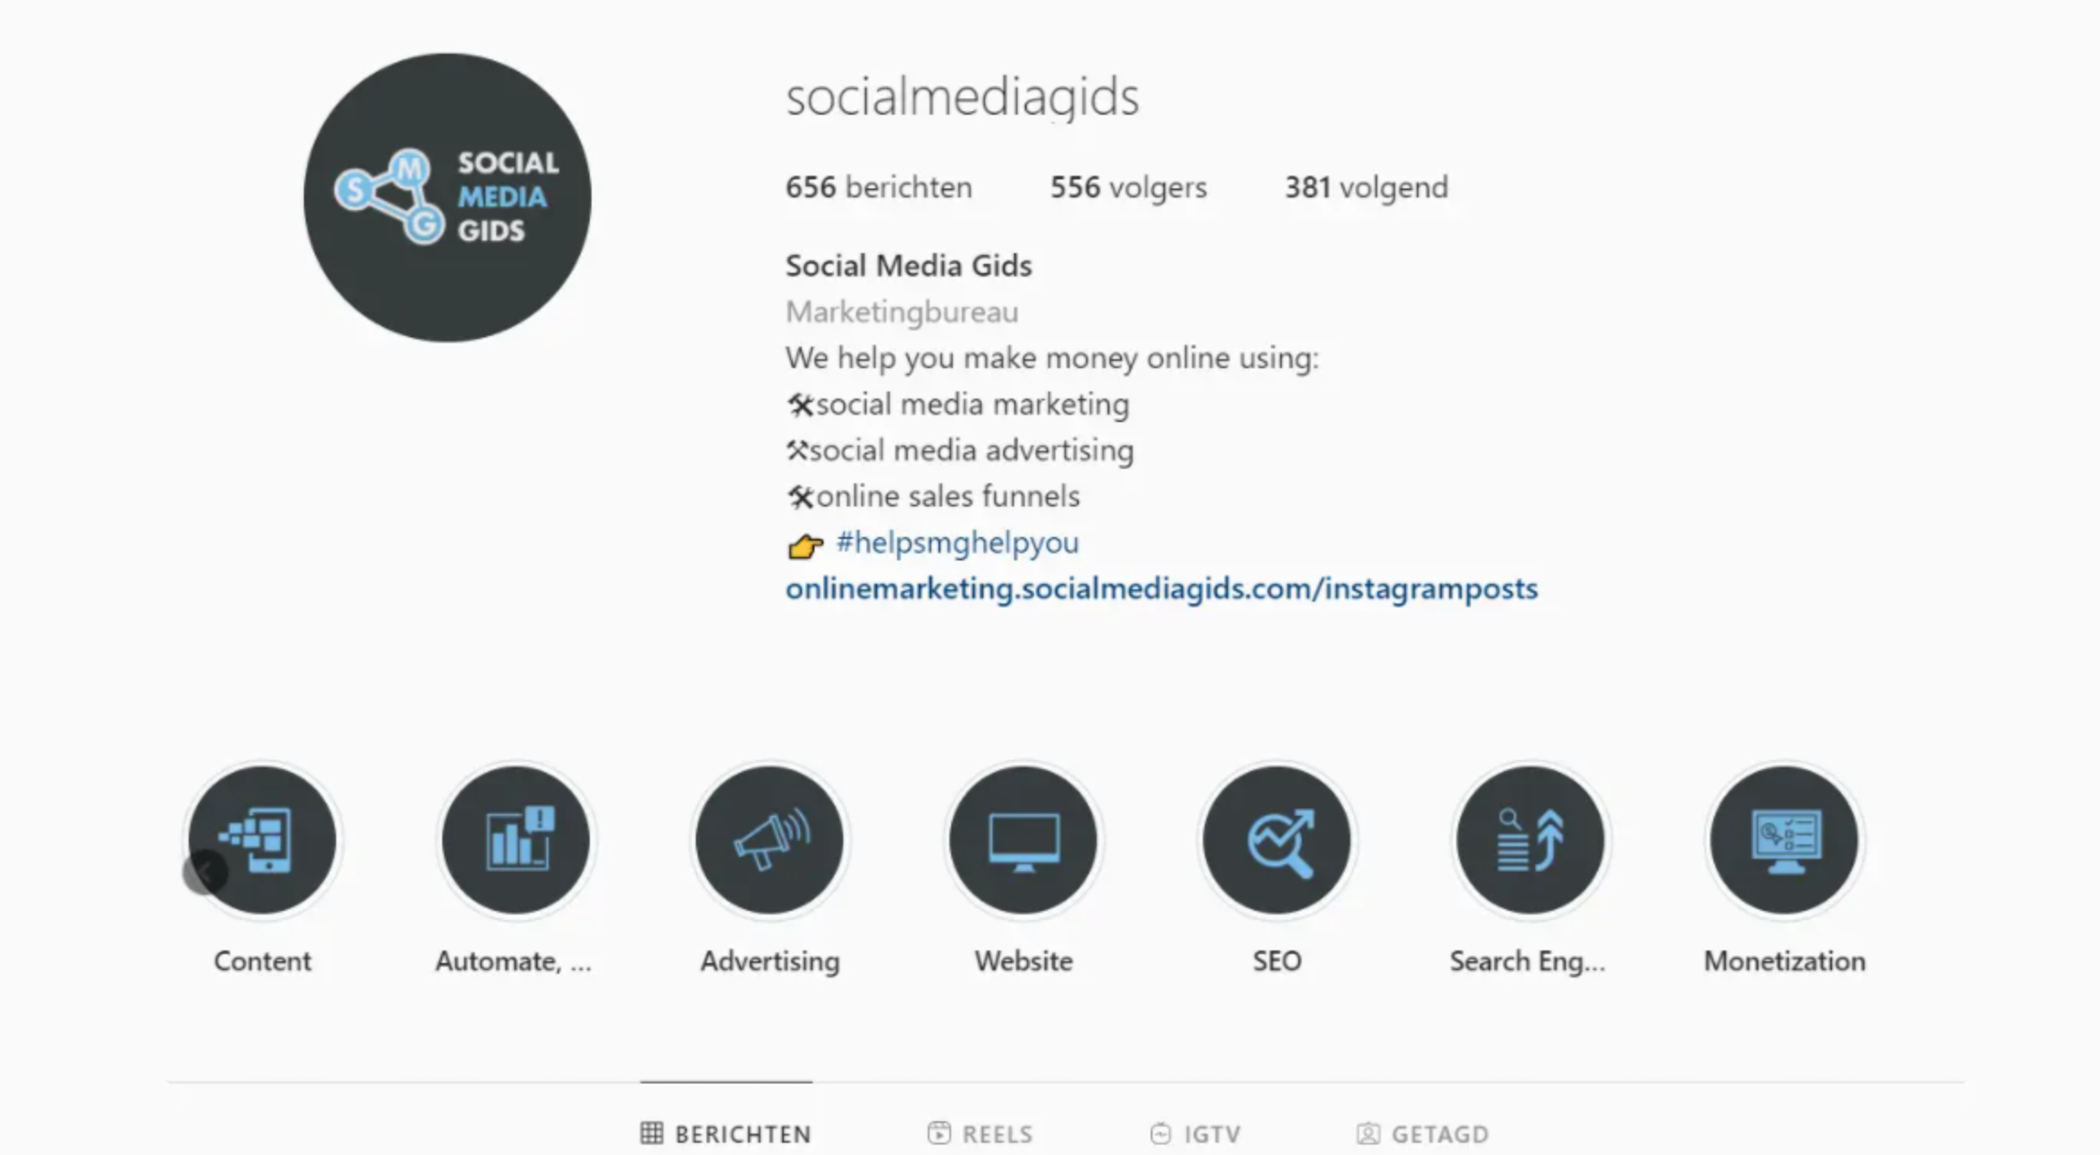 Instagram Posts Of Social Media Gids